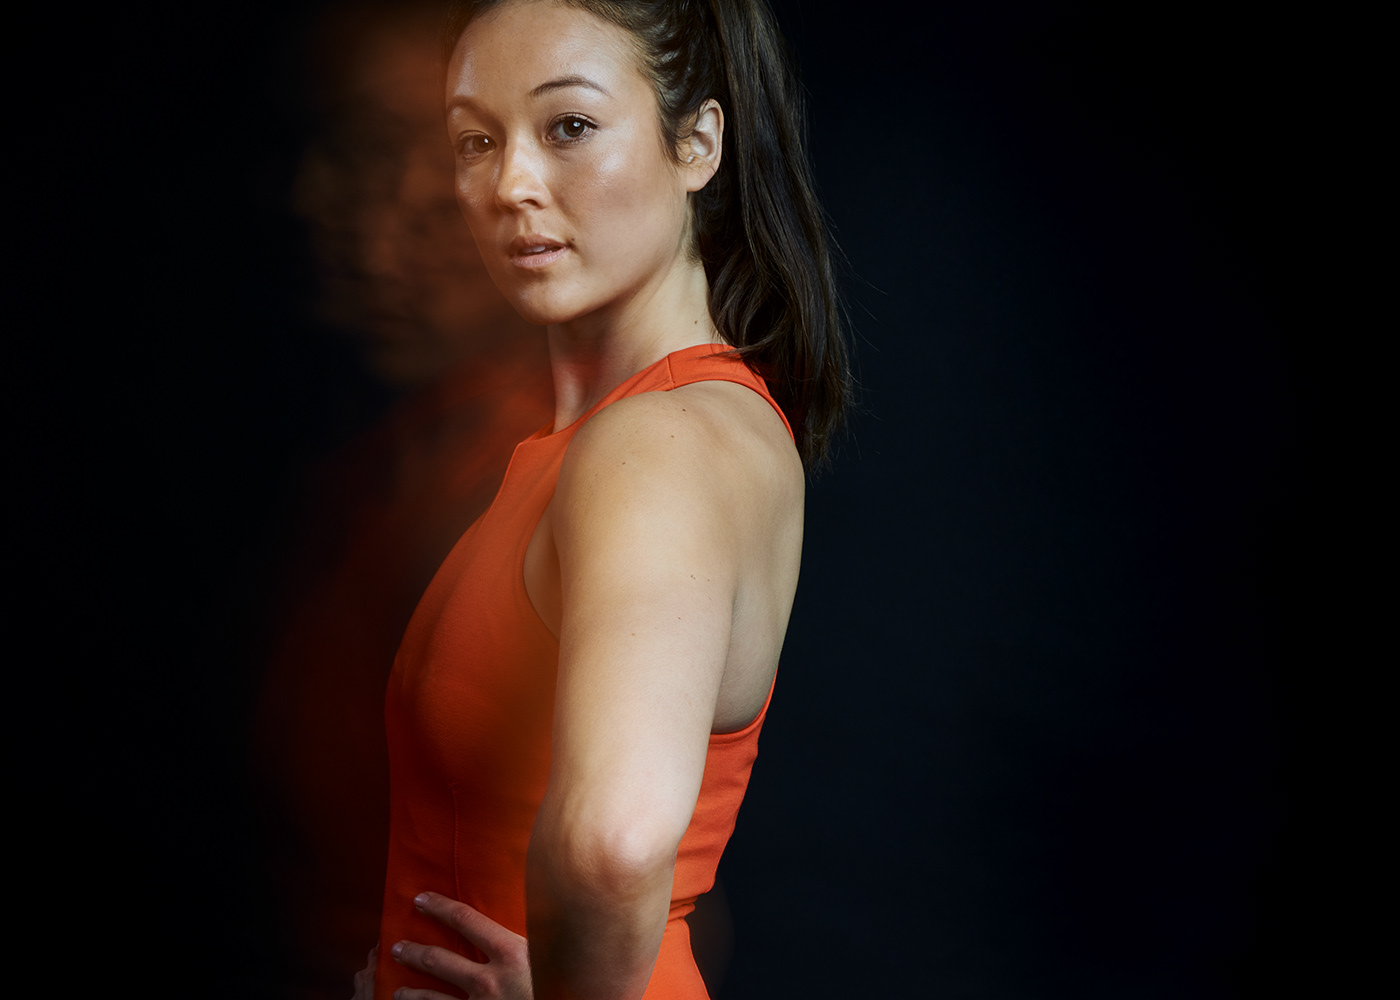 adidas gymnastics movement Advertising Photography ellette Craddock Female portrait fitness athlete gym motion blur sports